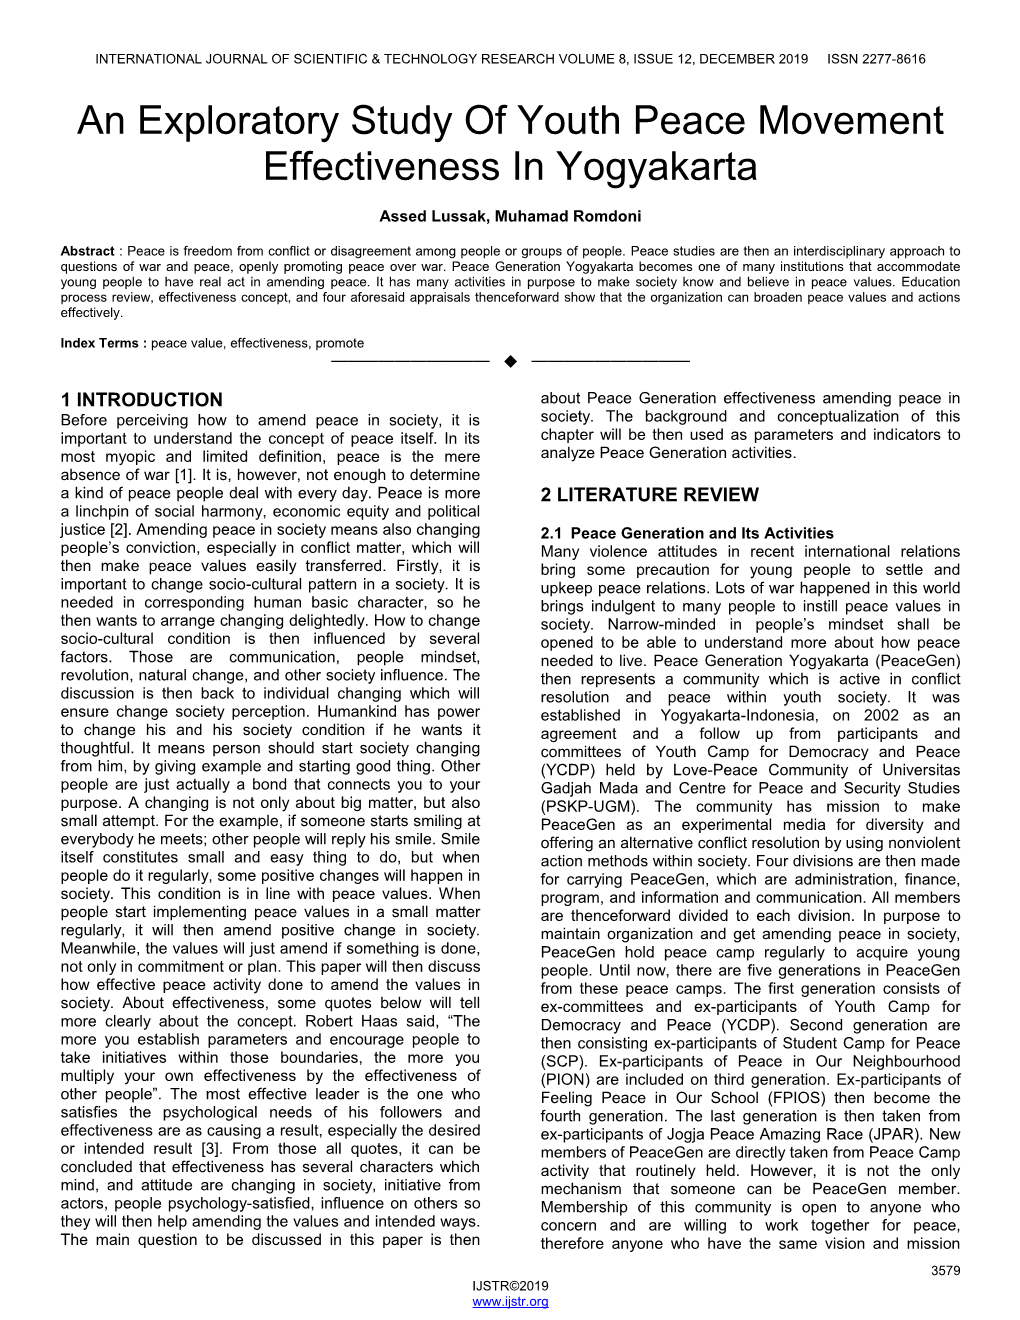 An Exploratory Study of Youth Peace Movement Effectiveness in Yogyakarta